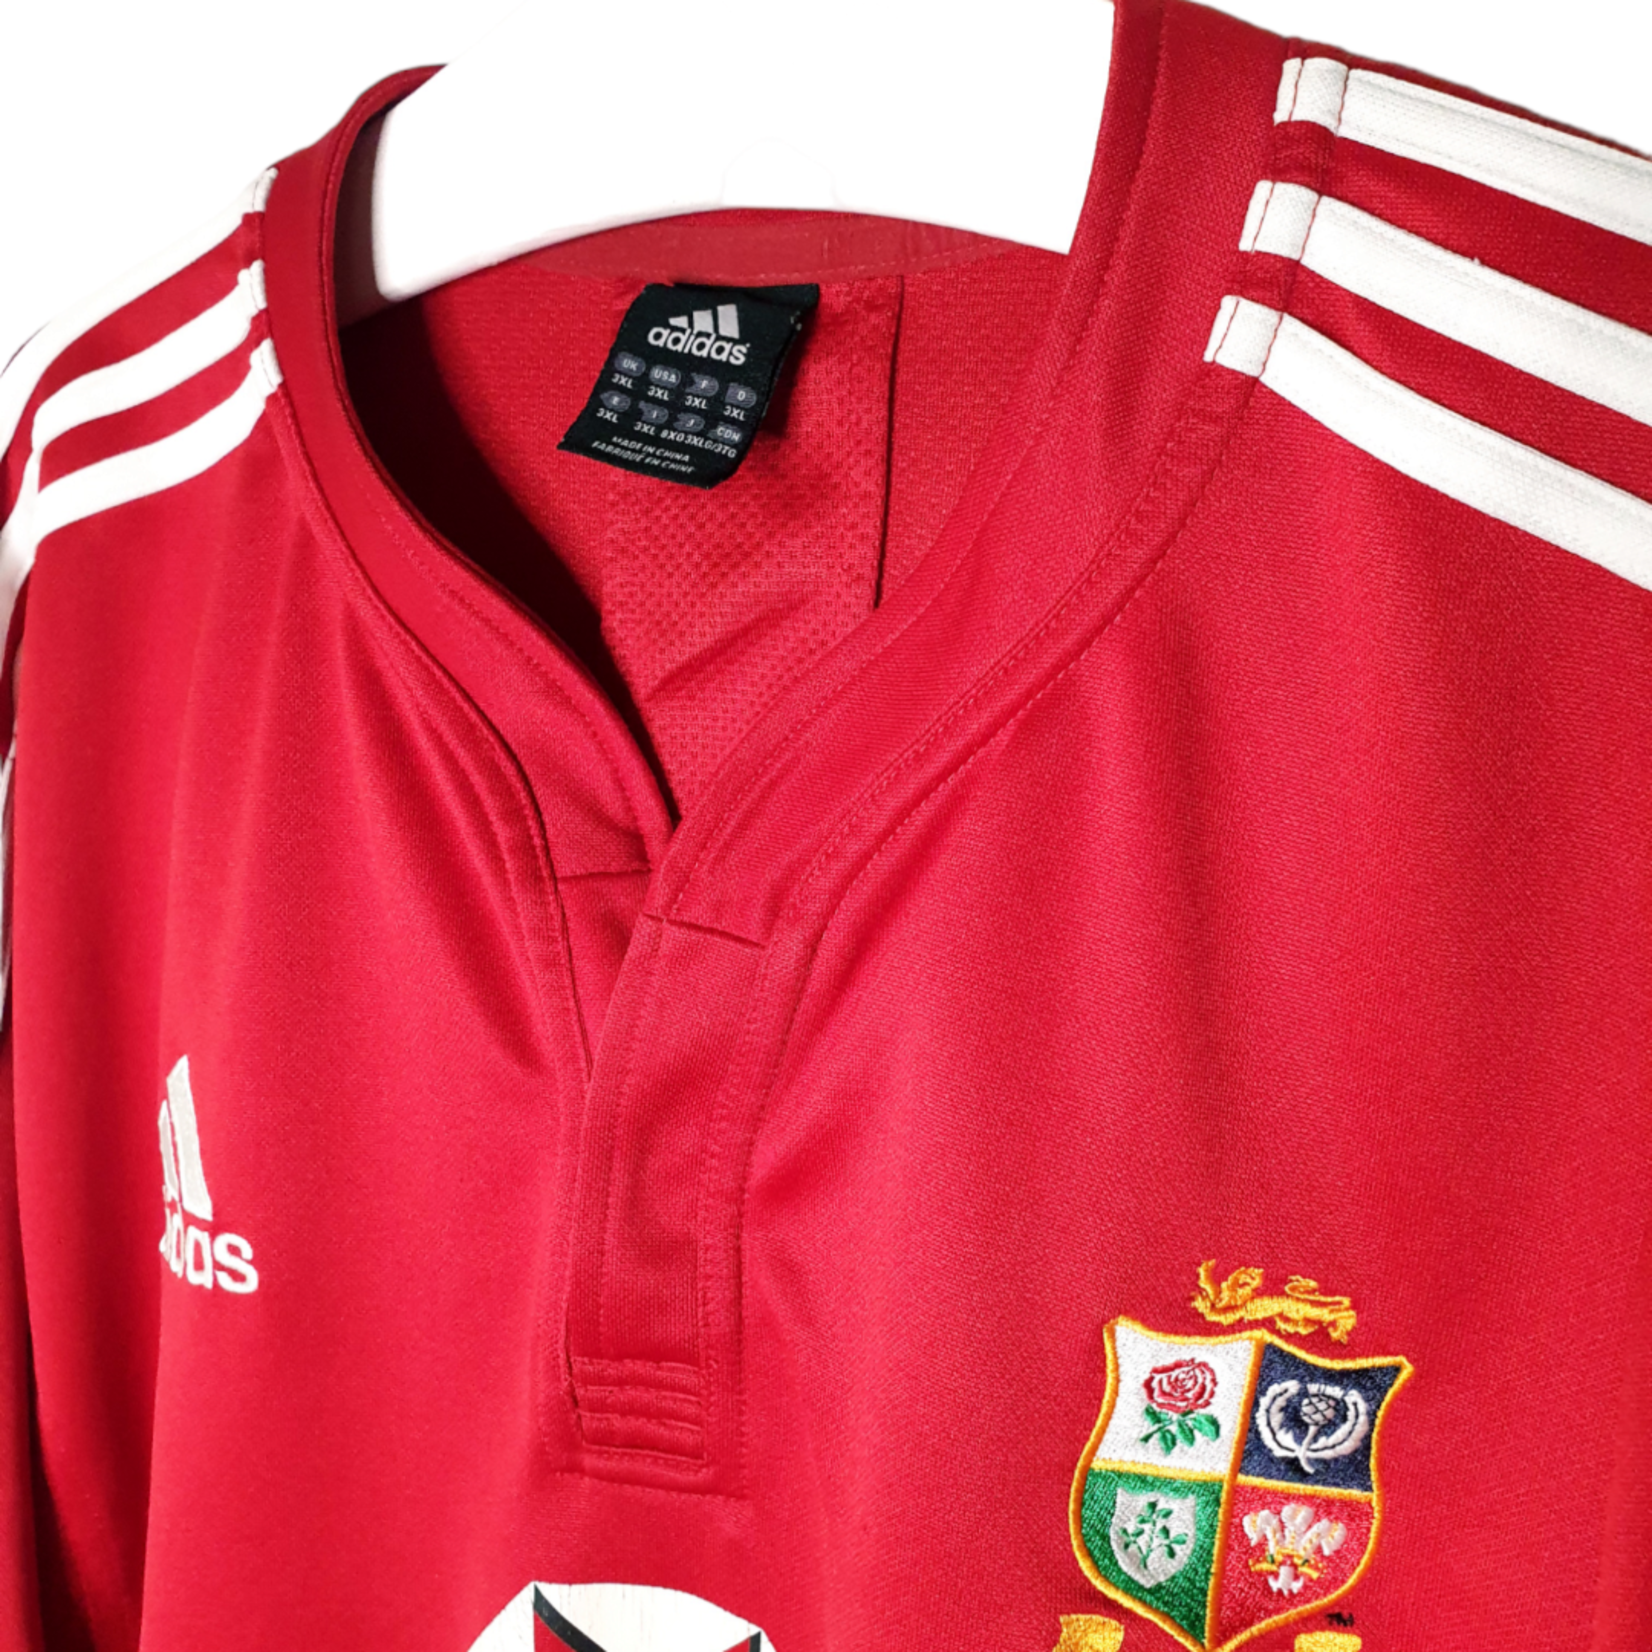 Adidas Origineel Adidas vintage rugby shirt British & Irish Lions 2009